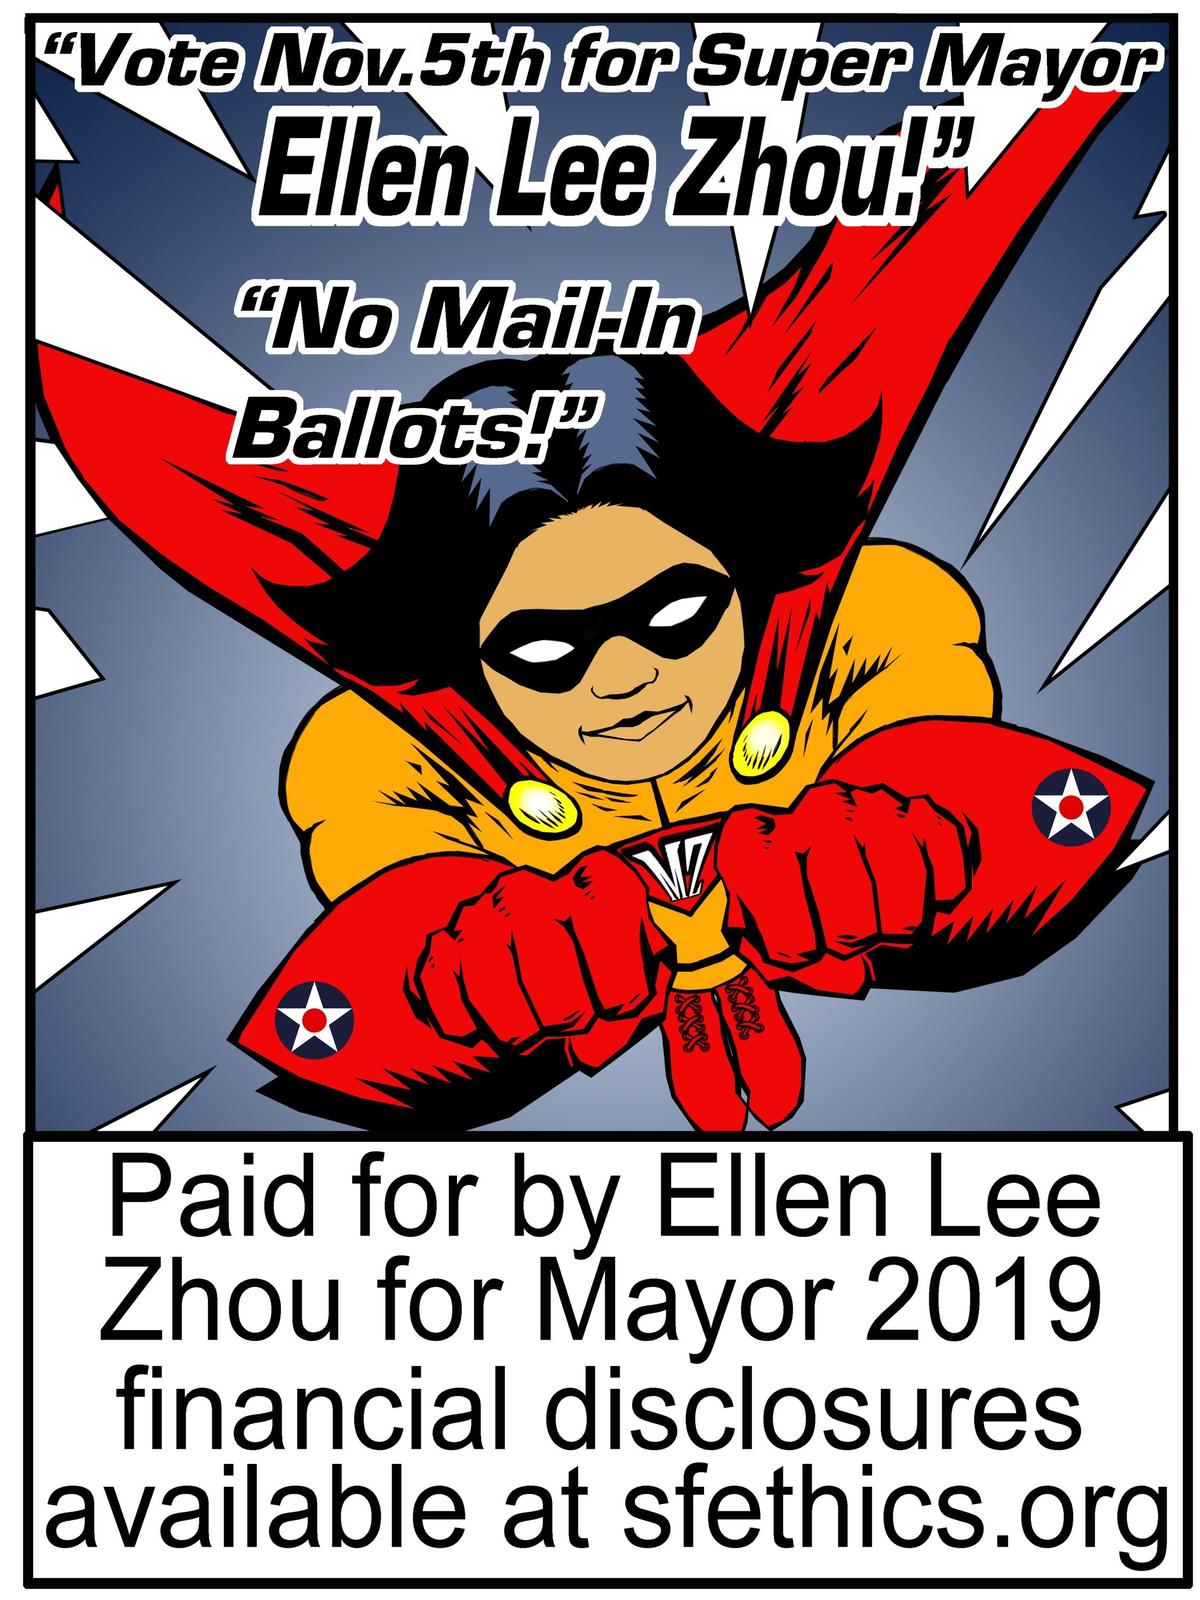 Ellen Lee Zhou campaign advertisement. (Courtesy of Ellen Lee Zhou)